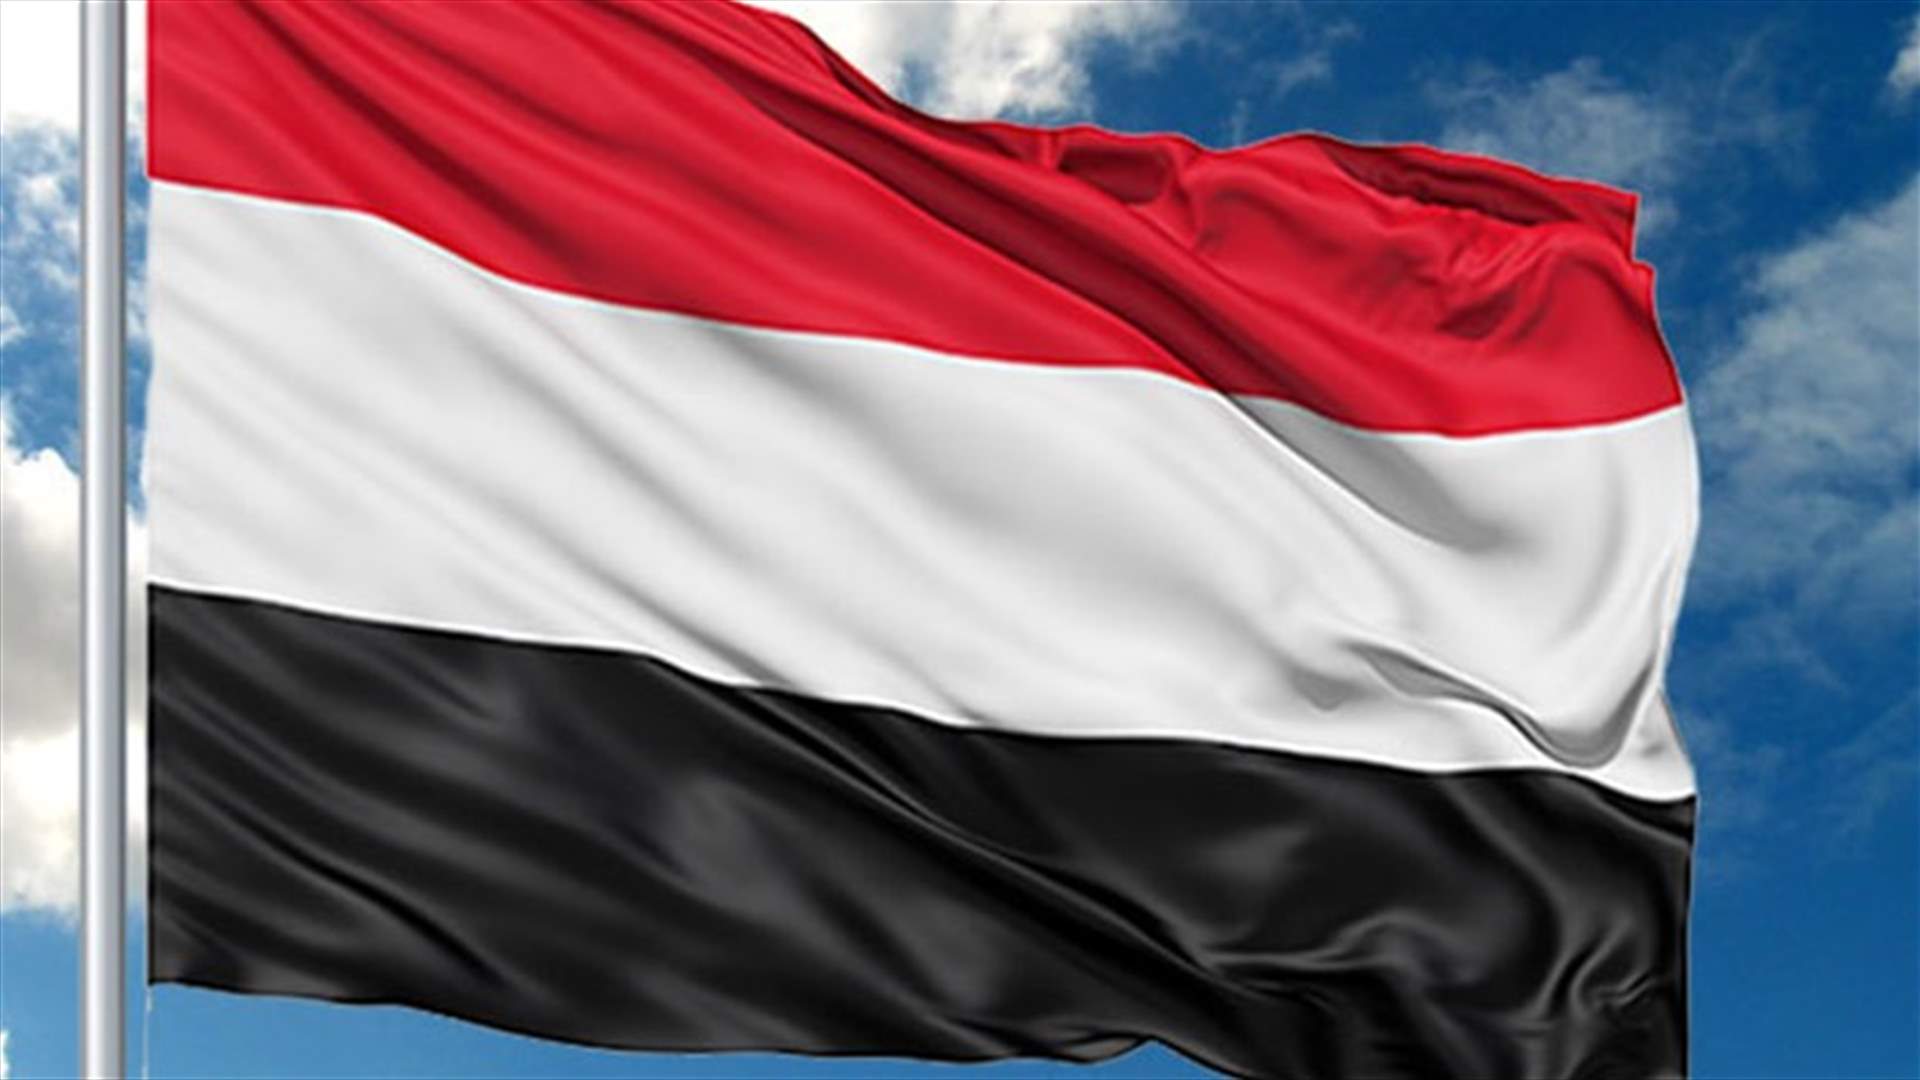 Nearly 30 dead in Qaeda attack and clashes in Yemen